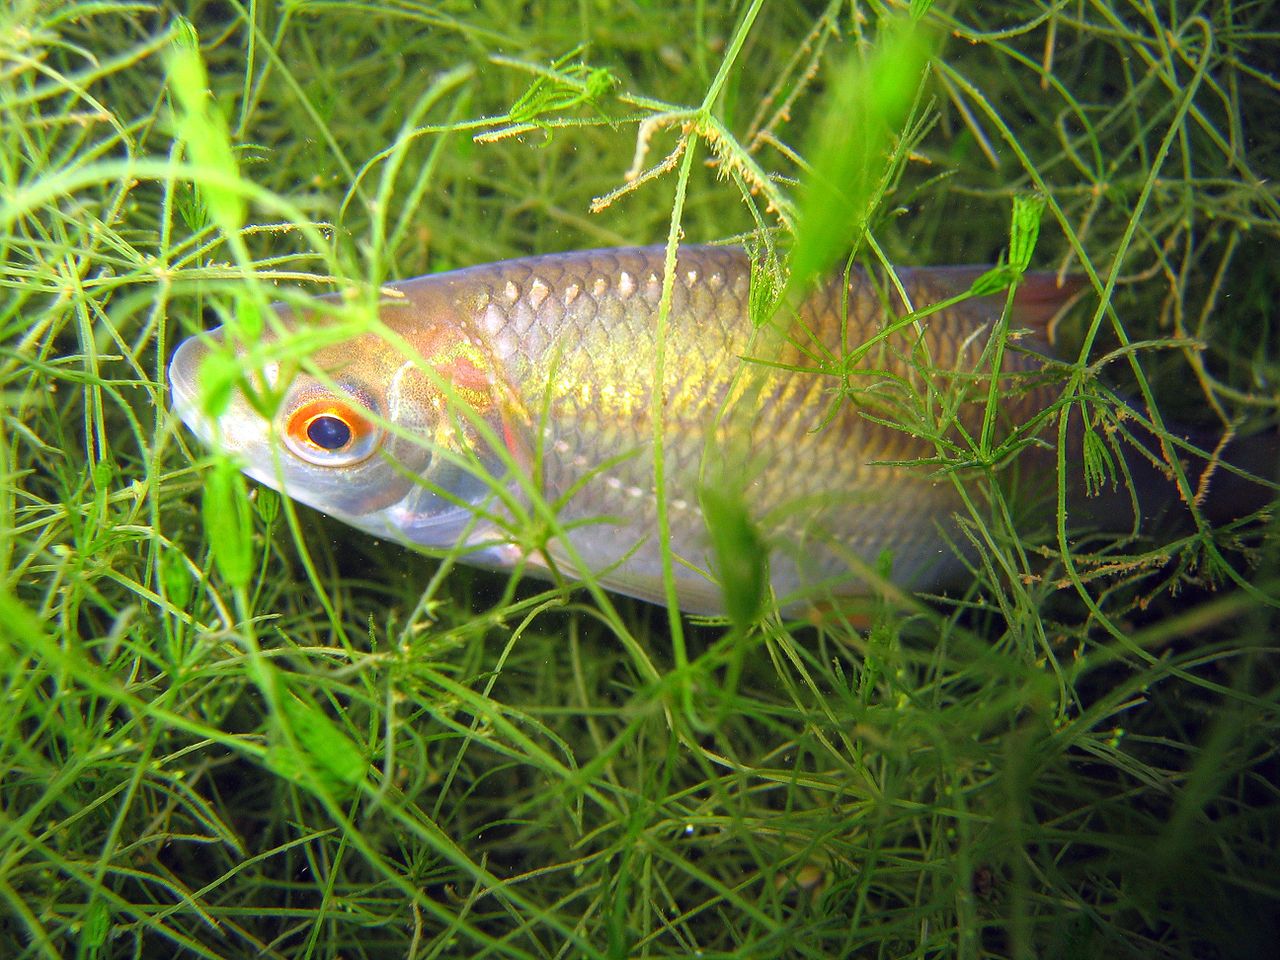 Le Gardon, espèce du Marais poitevin, est un poisson omnivore. Il se nourrit aussi bien de plantes aquatiques, d'algues, que de larves d'insectes, de mollusques, de crustacés...